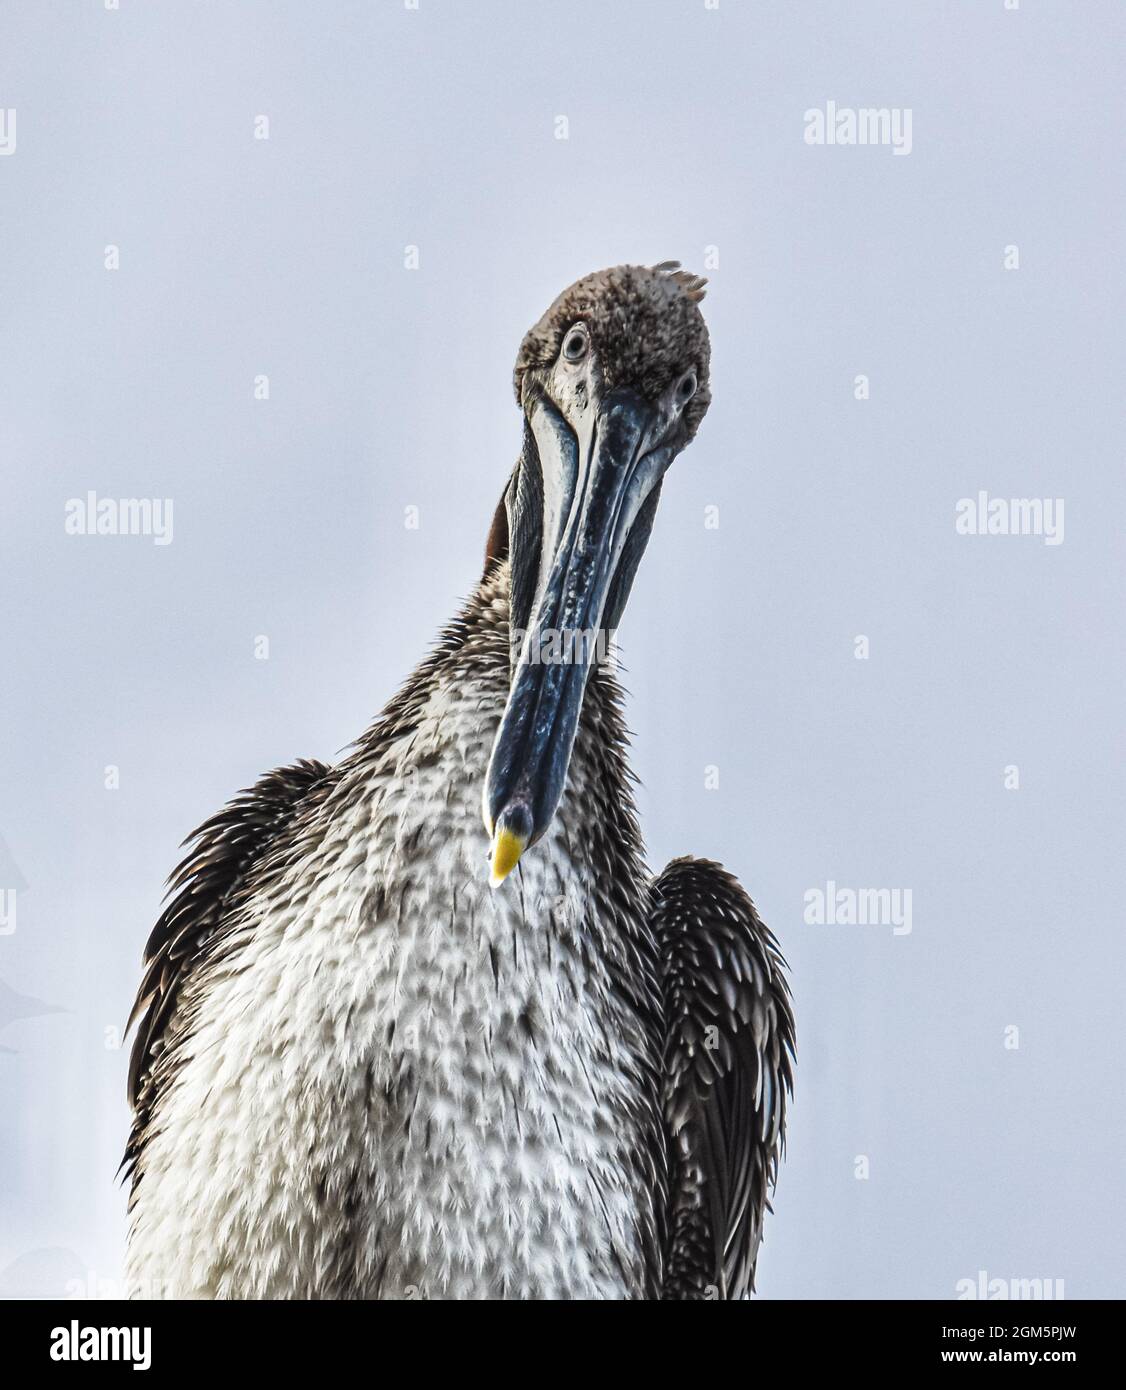 A frontview portrait of a wild juvenile Brown Pelican (Pelecanus occidentalis). Closeup. Copy space. Stock Photo